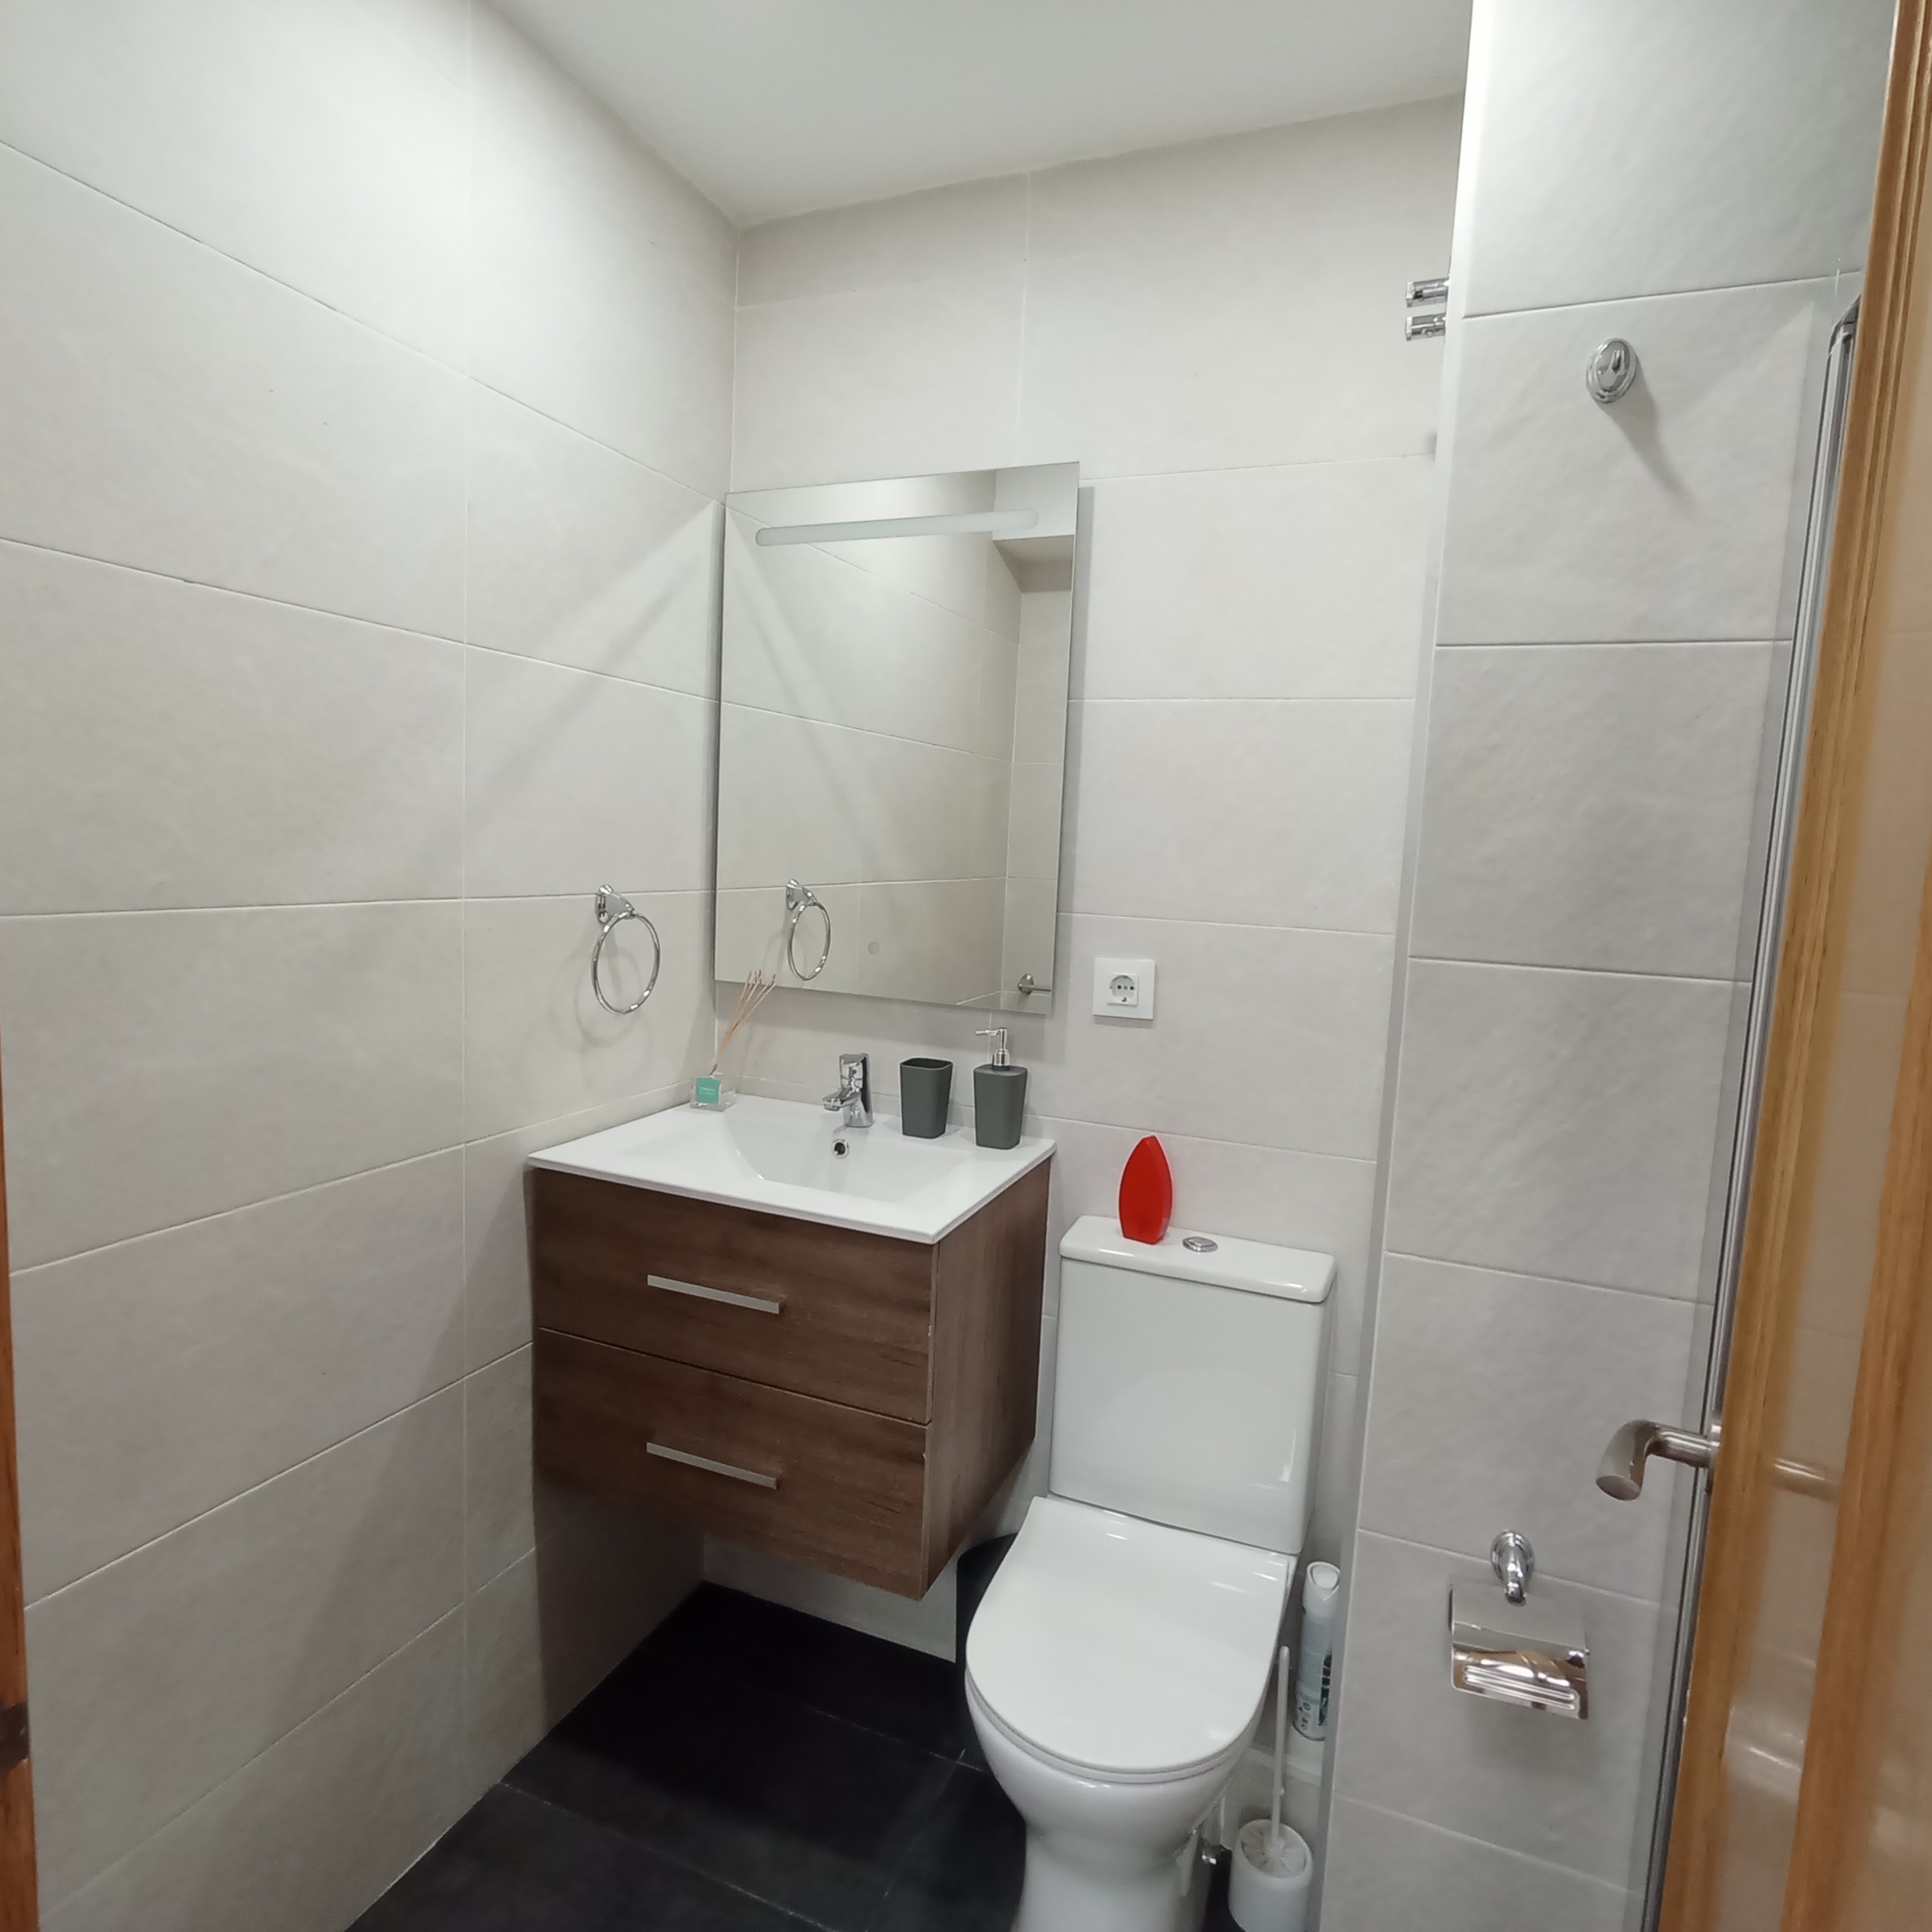 Trafalgar - 3 Bedroom apartment for rent in Valencia bathroom